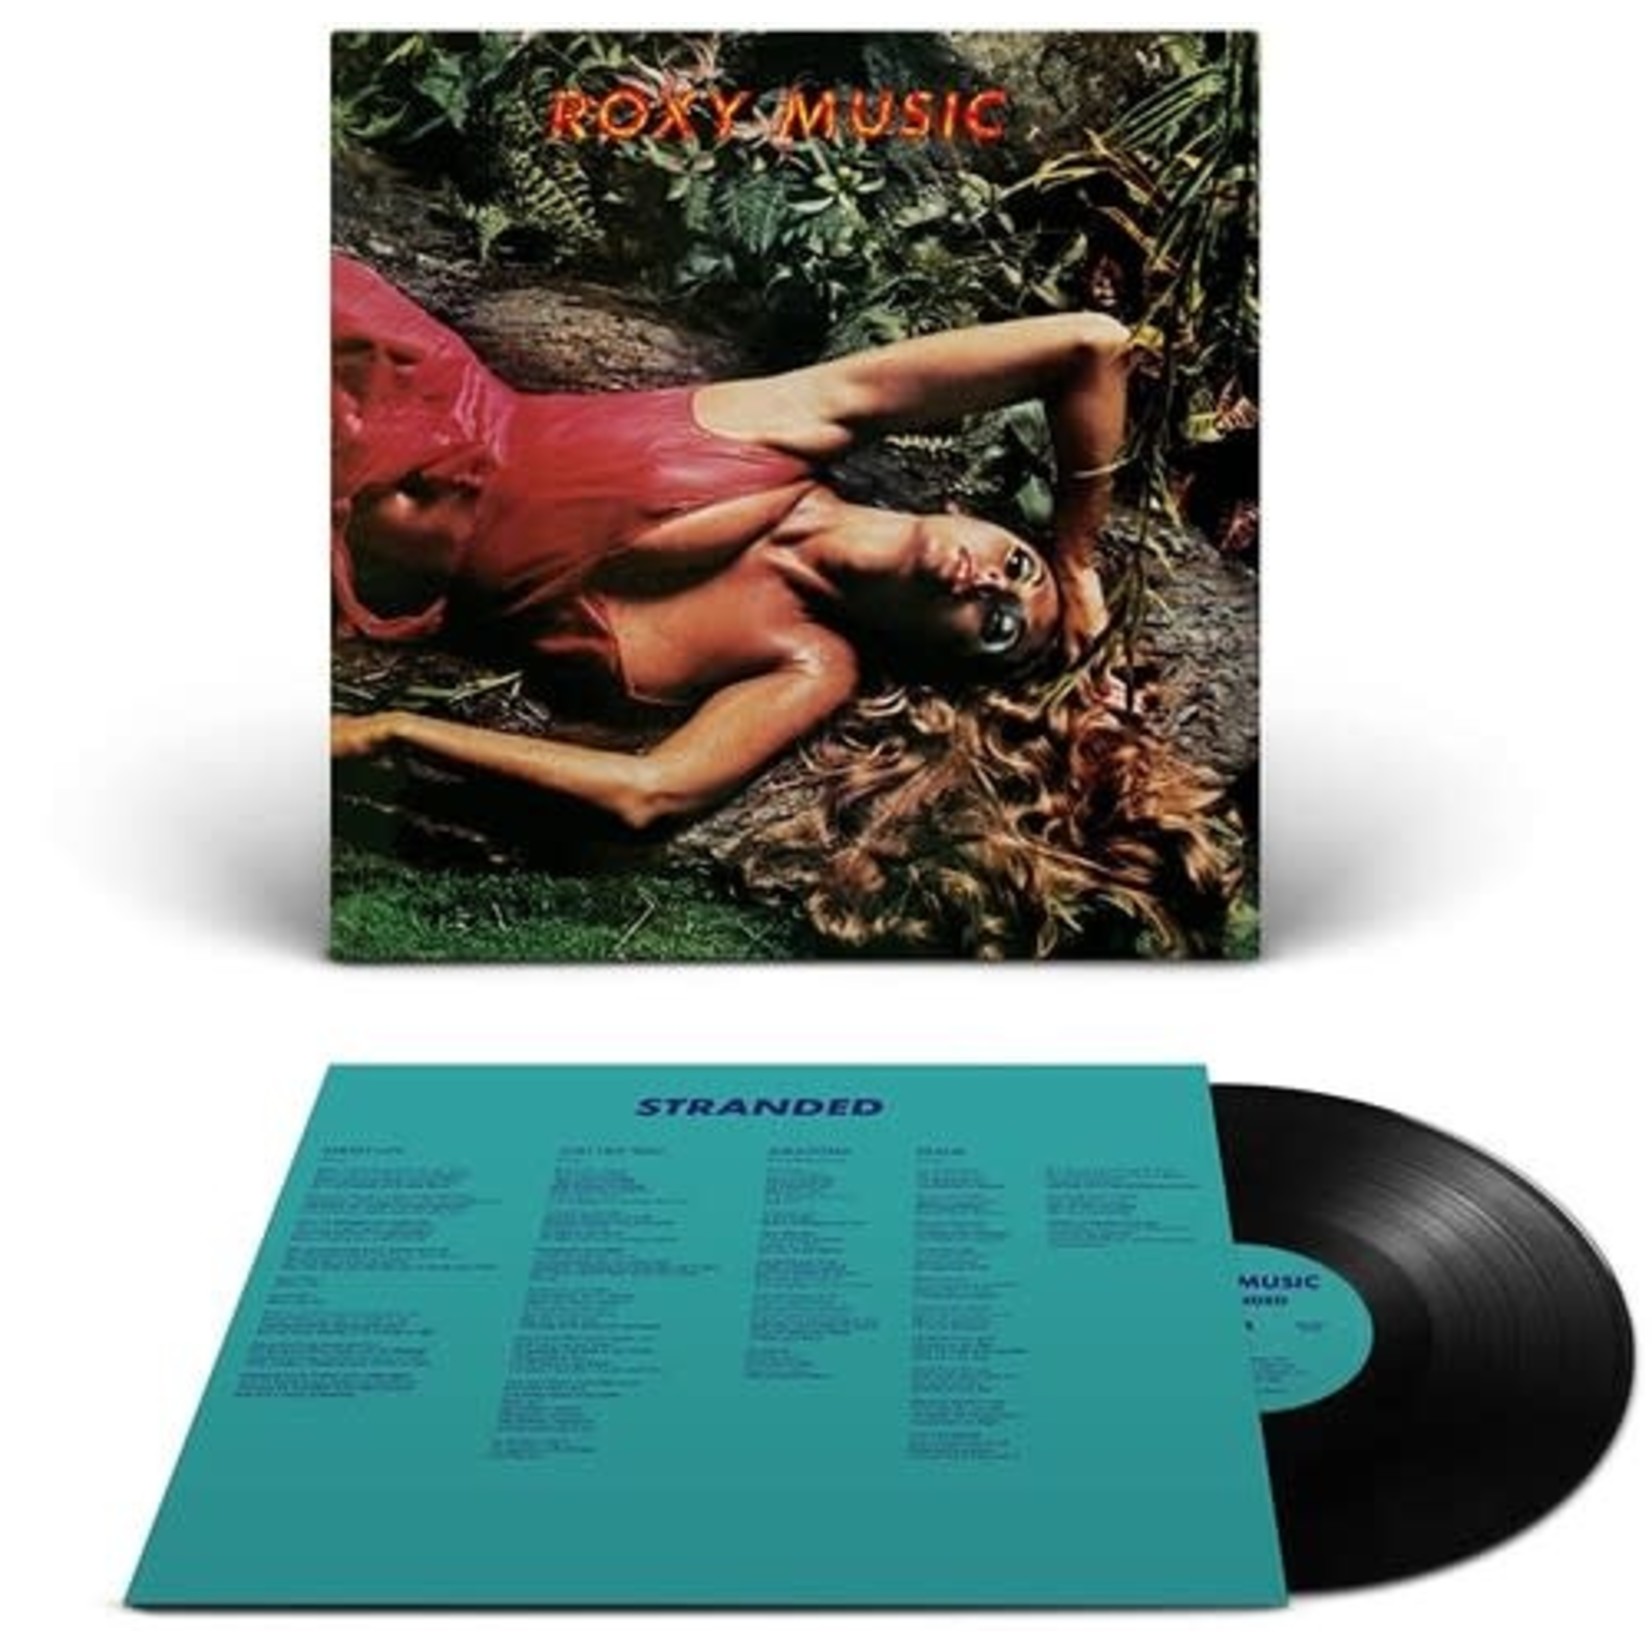 Roxy Music - Stranded (Half Speed Mastering) [LP]